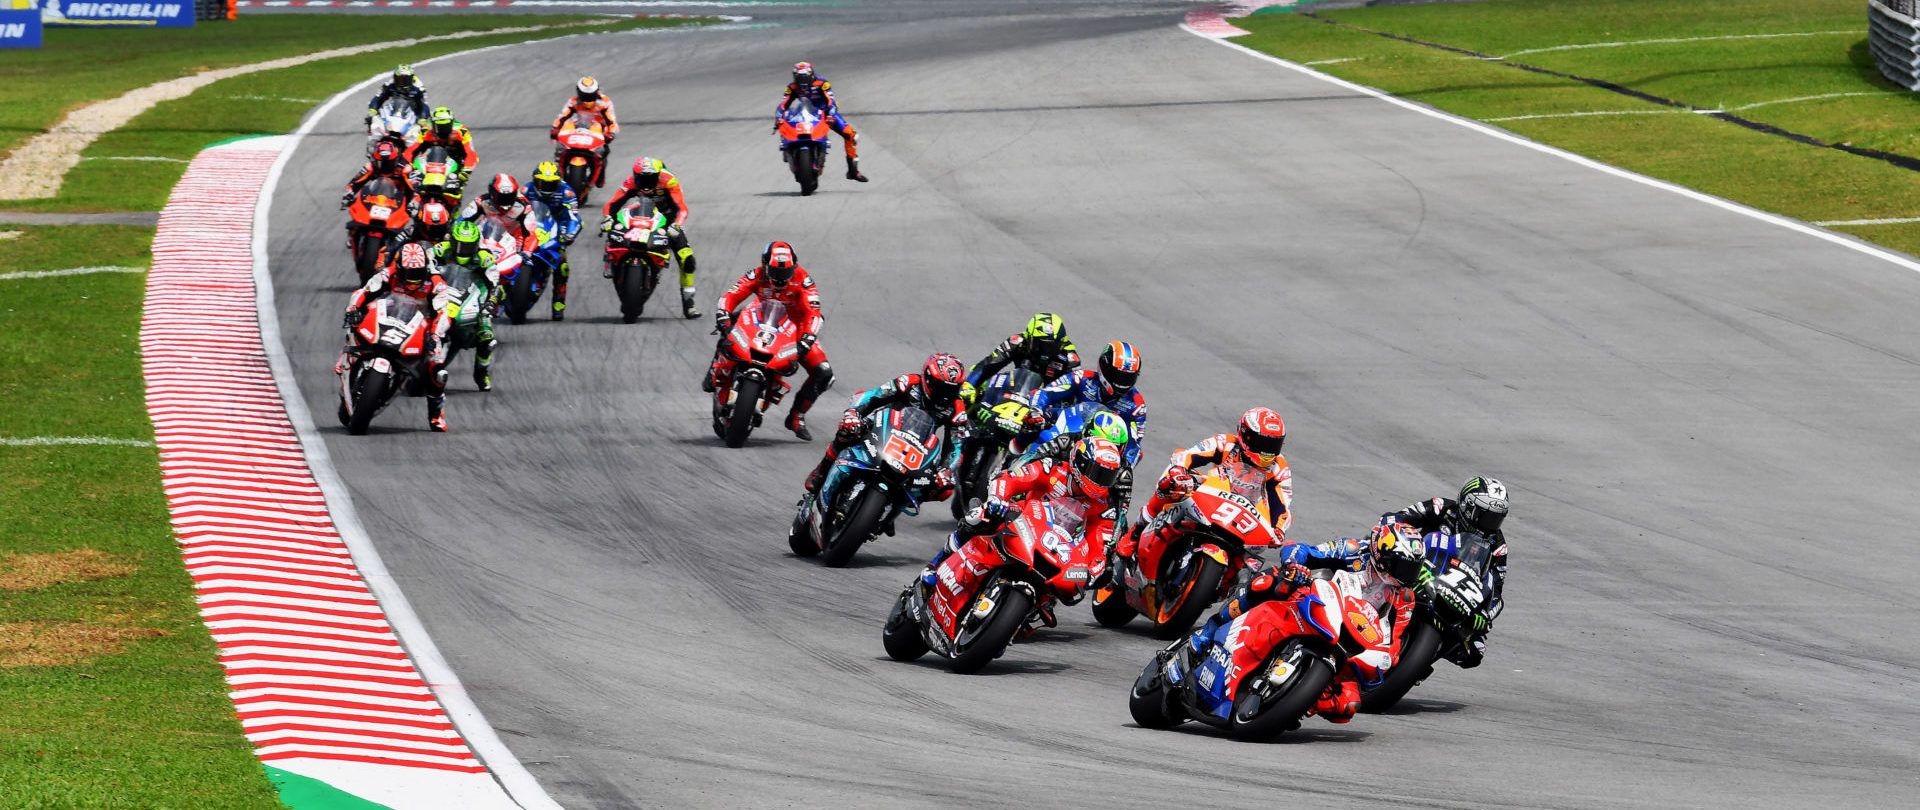 The start of the Malaysian Grand Prix at Sepang International Circuit. Photo courtesy Michelin.